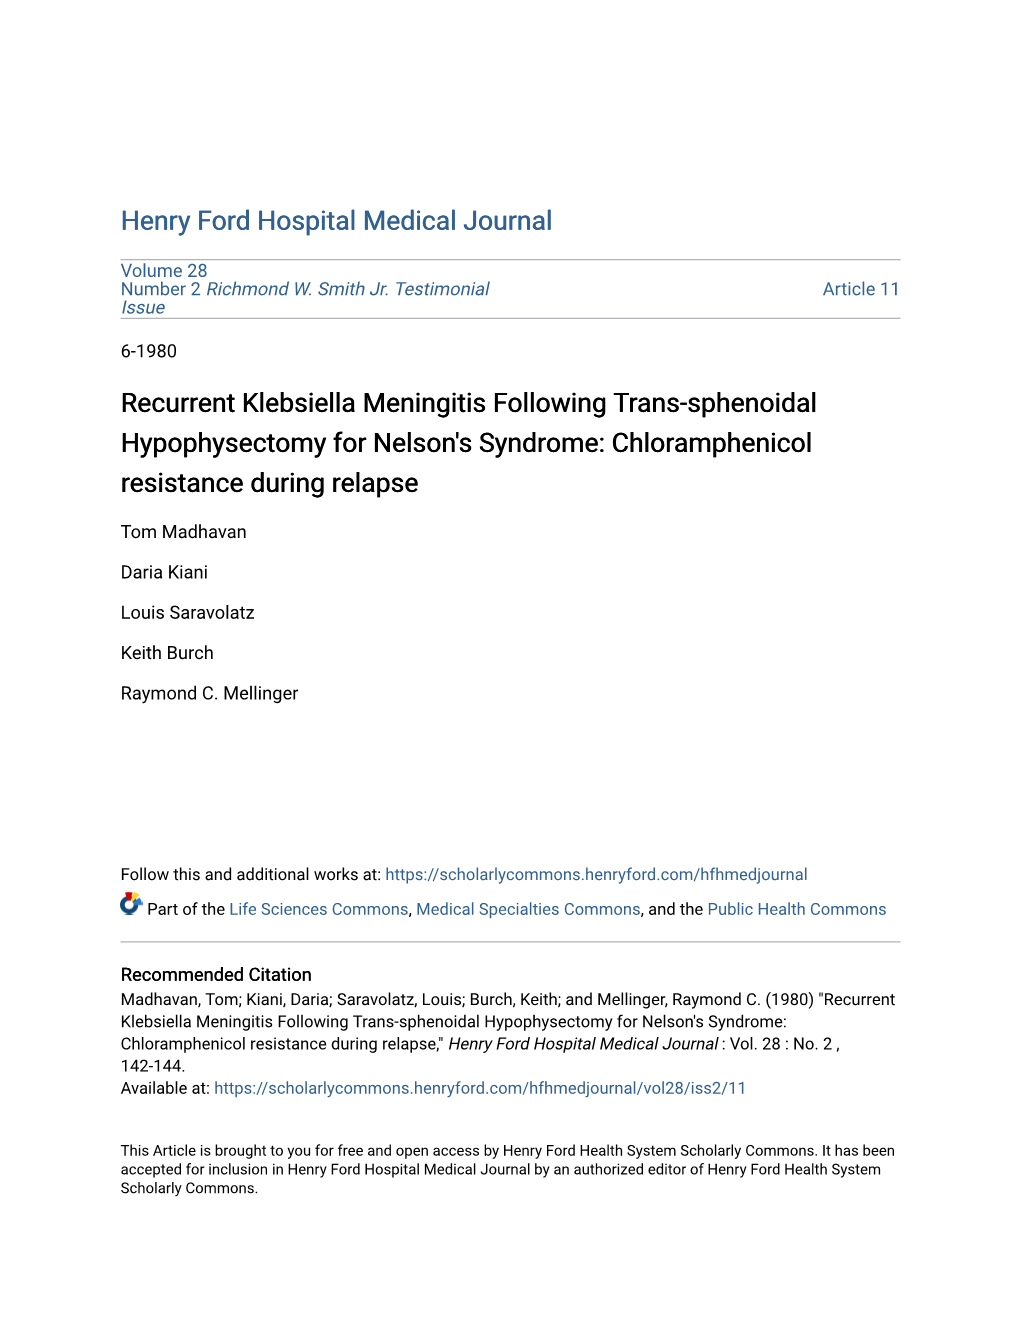 Recurrent Klebsiella Meningitis Following Trans-Sphenoidal Hypophysectomy for Nelson's Syndrome: Chloramphenicol Resistance During Relapse